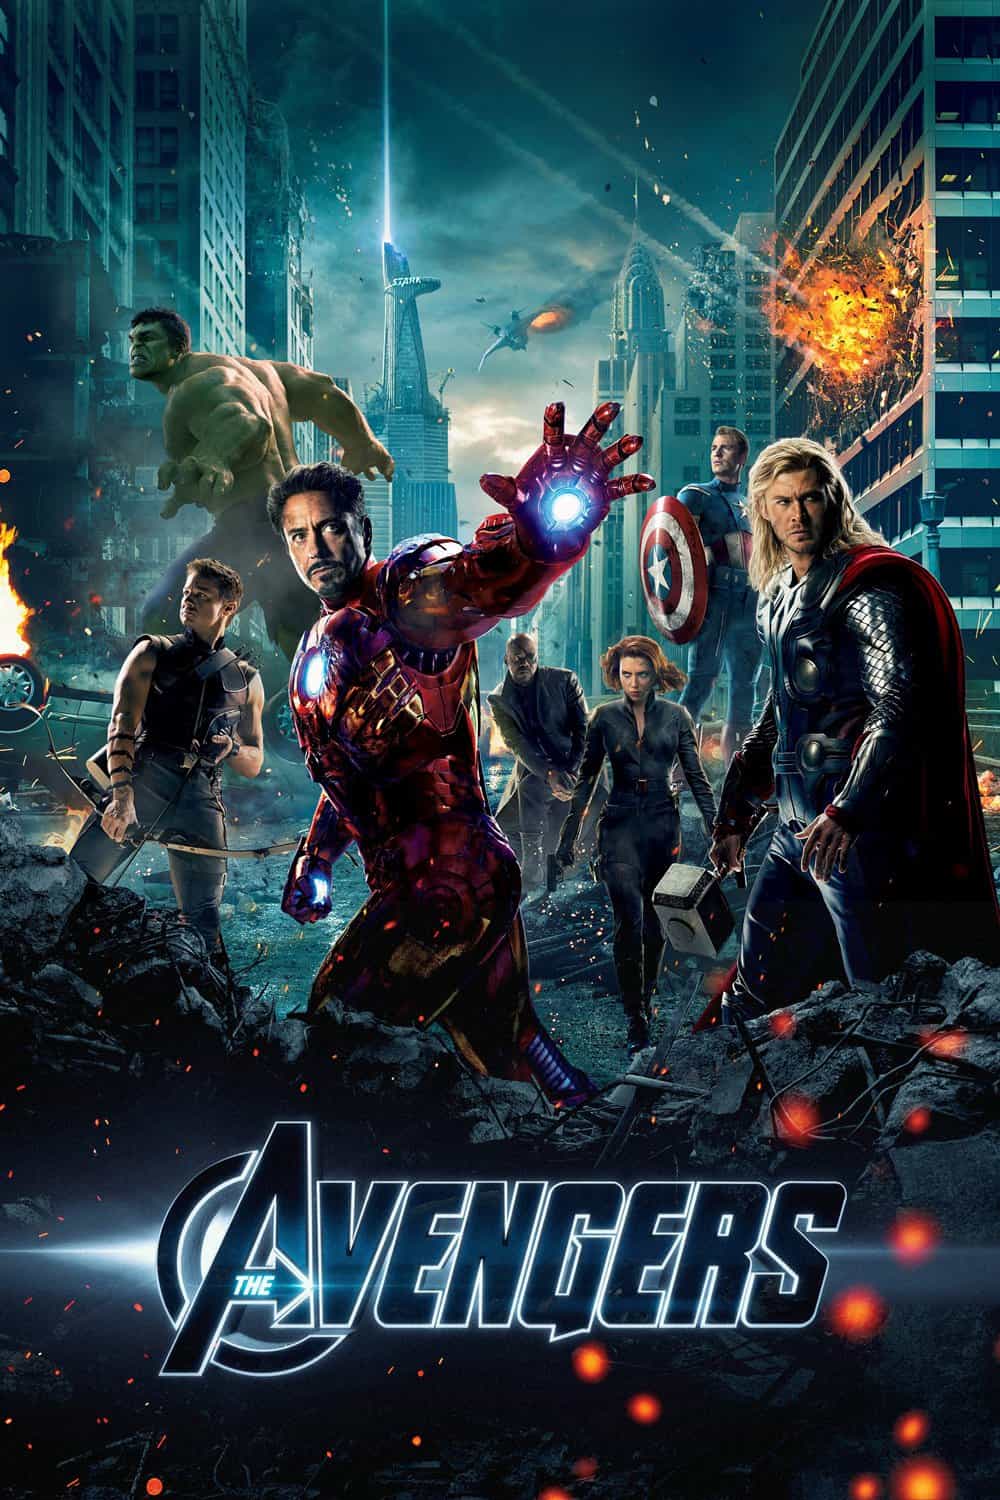 The Avengers, 2012 